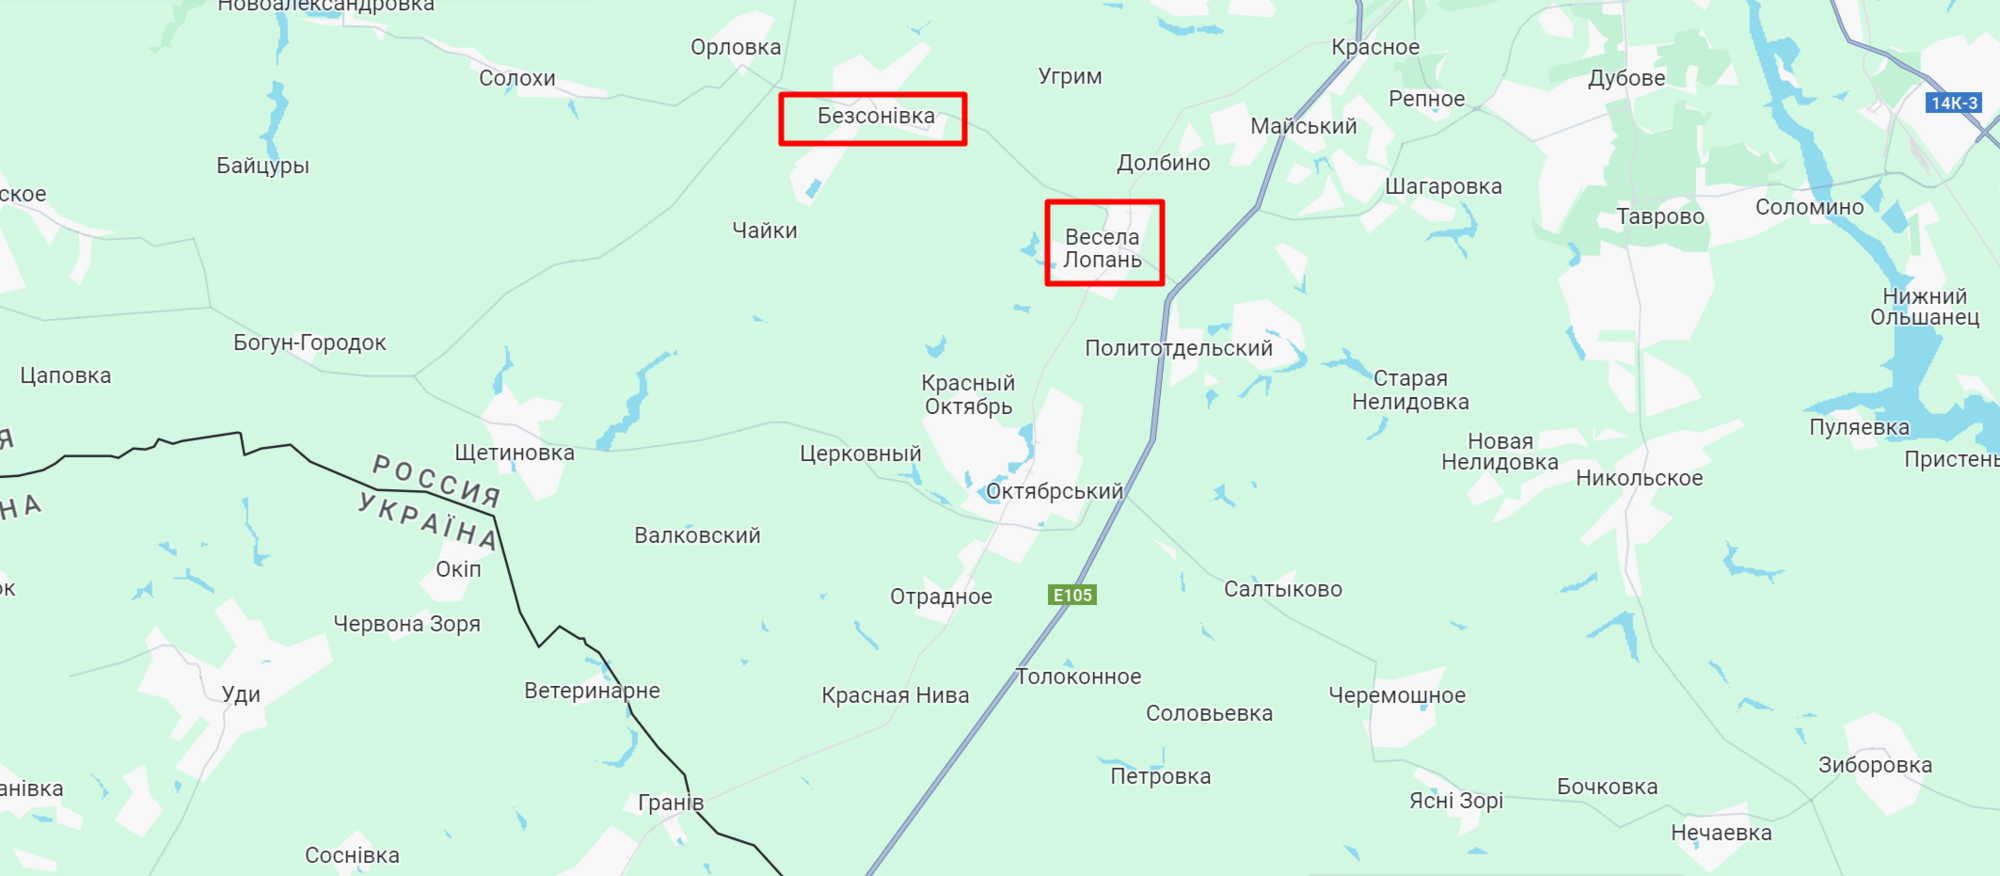 Aviation hits its own: Russian plane drops KAB-1500 bomb on Belgorod region